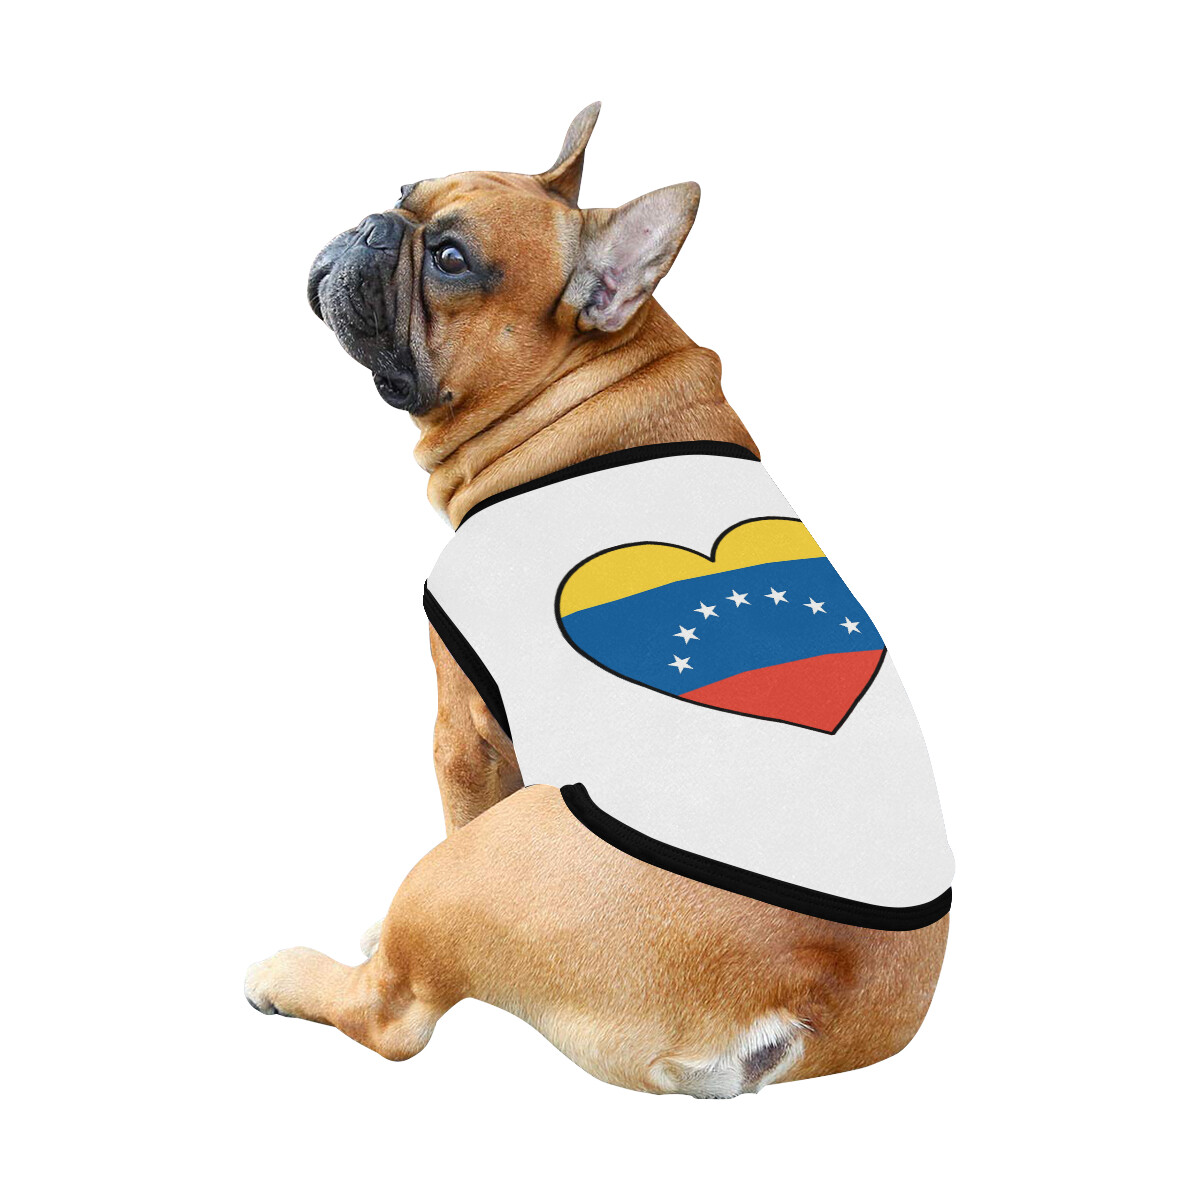 🐕🇻🇪 I love Venezuela dog t-shirt, dog gift, dog tank top, dog shirt, dog clothes, gift, 7 sizes XS to 3XL, Venezuelan flag, heart, white